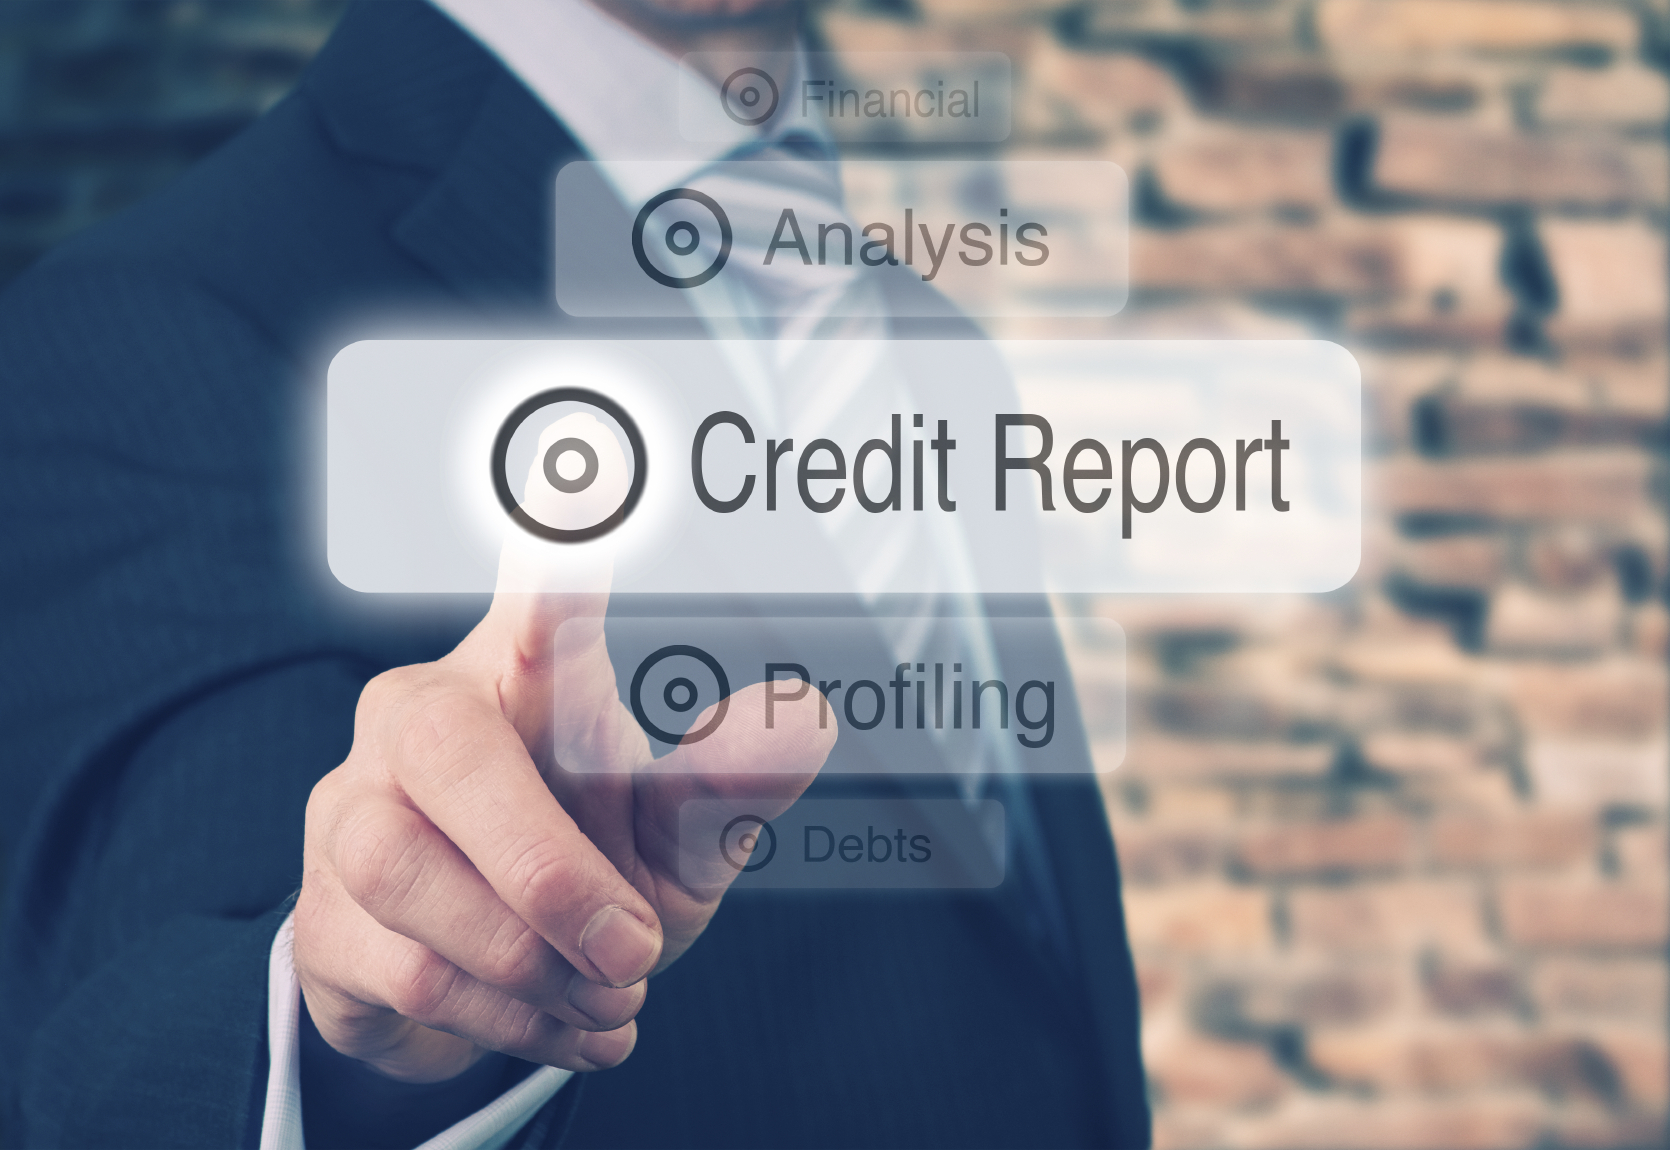 Can a Private Investigator Get a Credit Report?